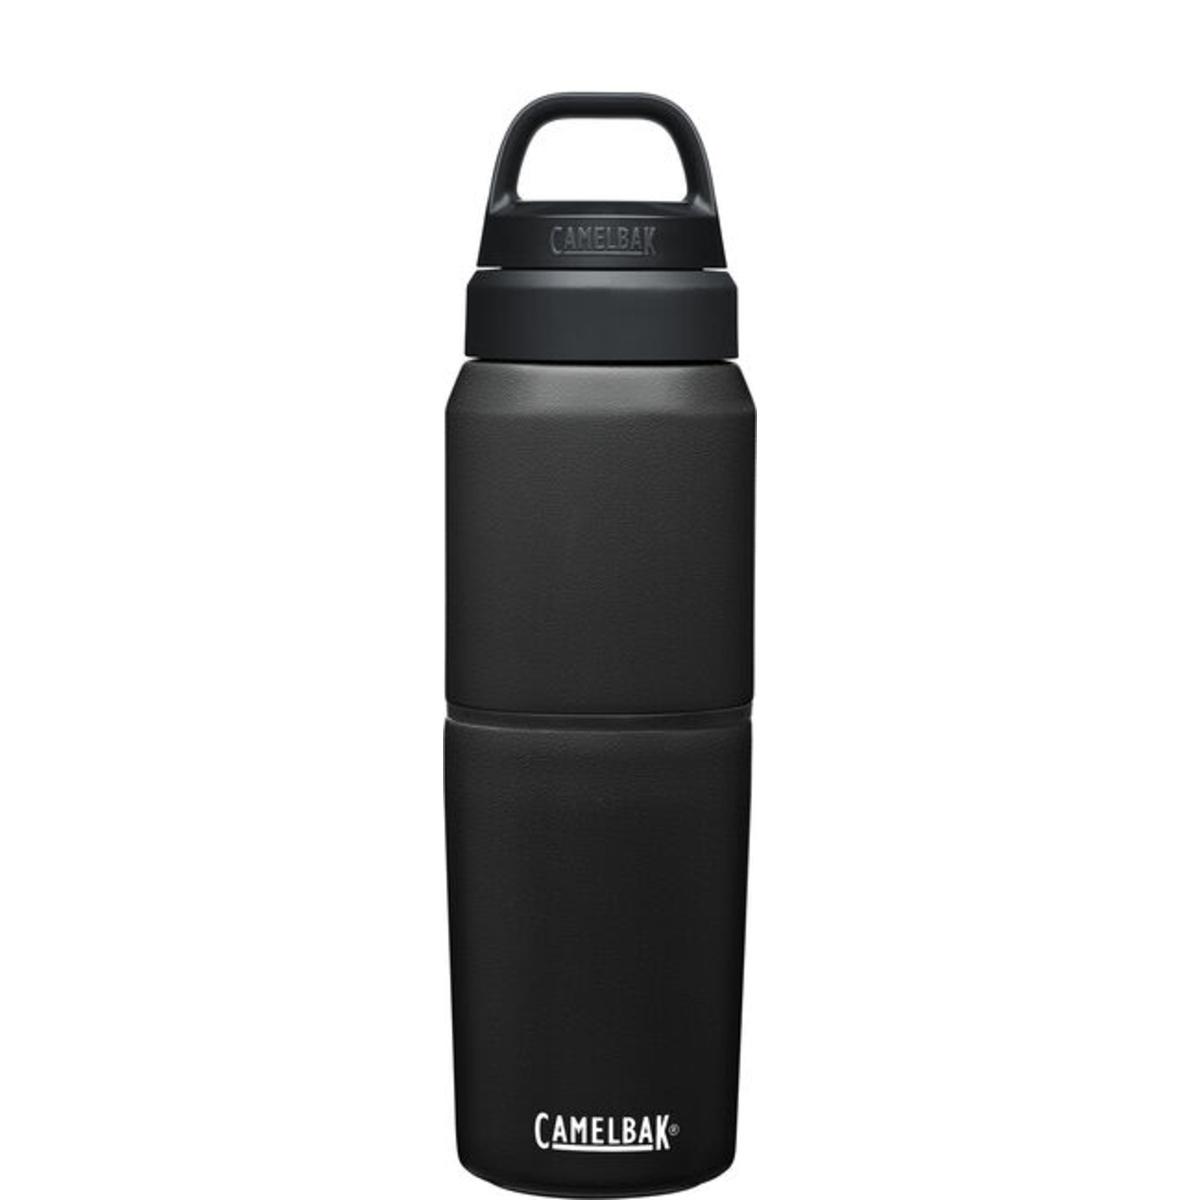 Camelbak MultiBev 17 oz Bottle / 12 oz Cup, Insulated Stainless